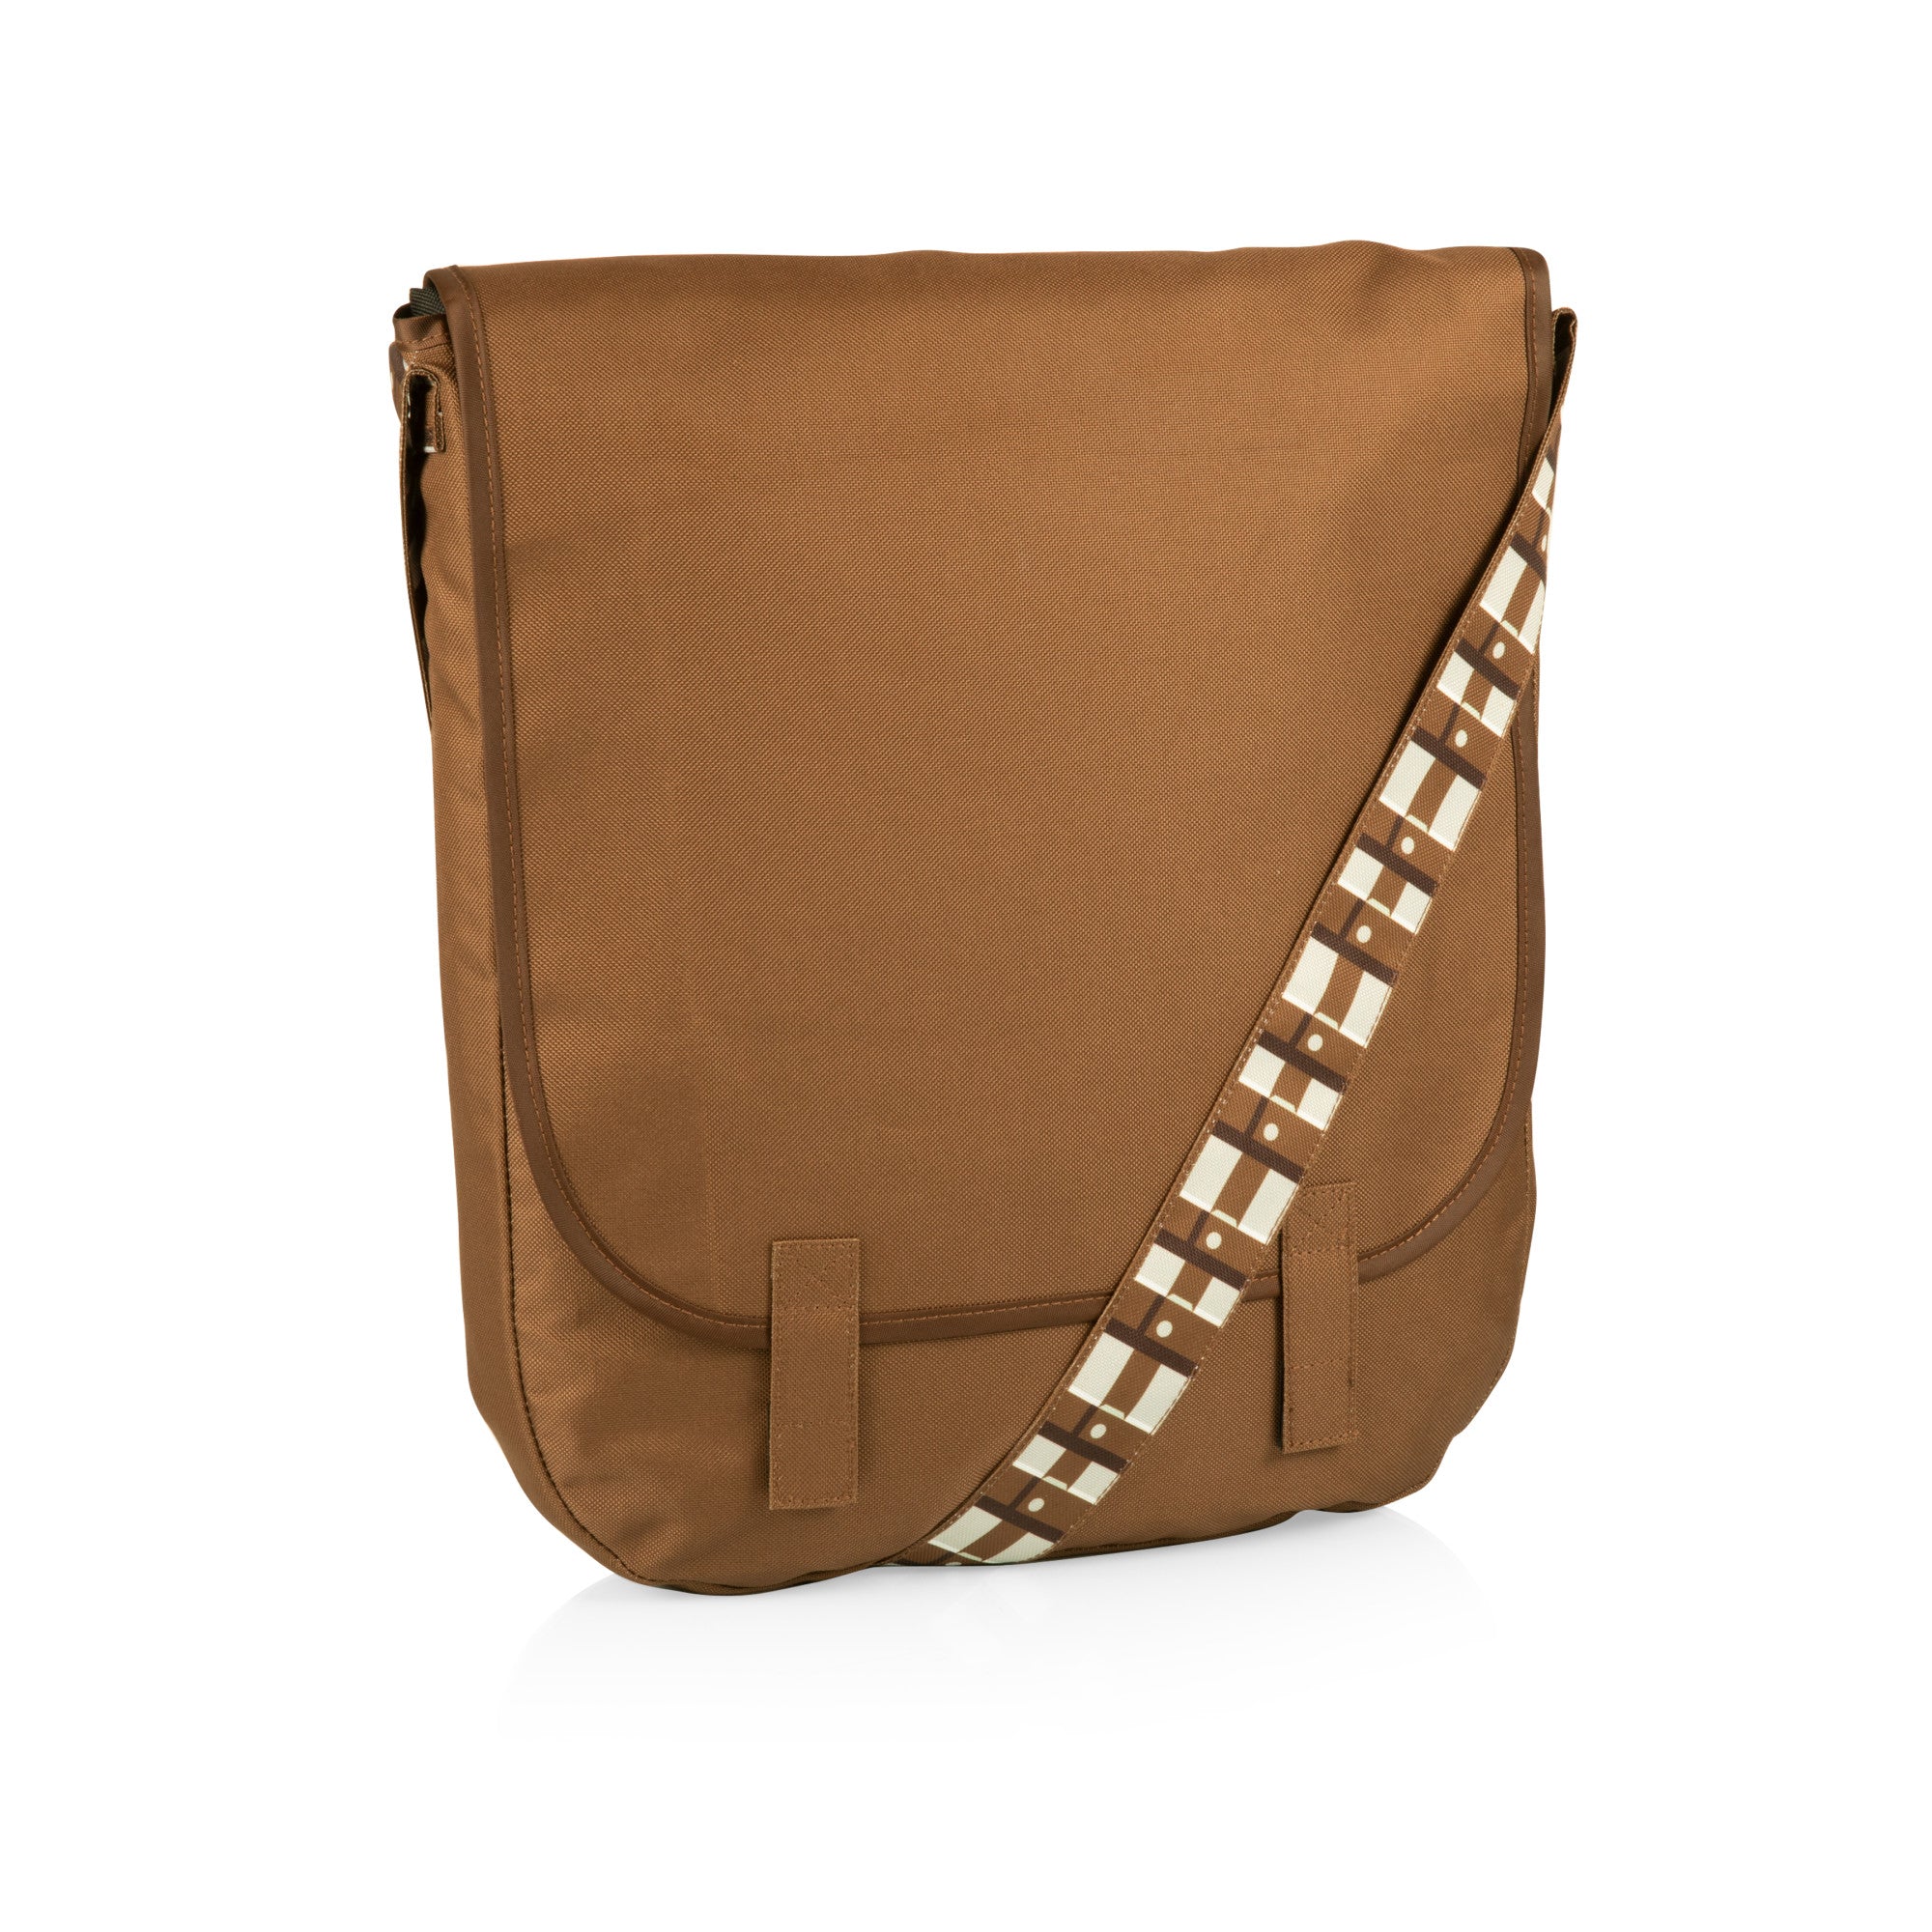 Star Wars Millennium Falcon - Blanket in a Bag